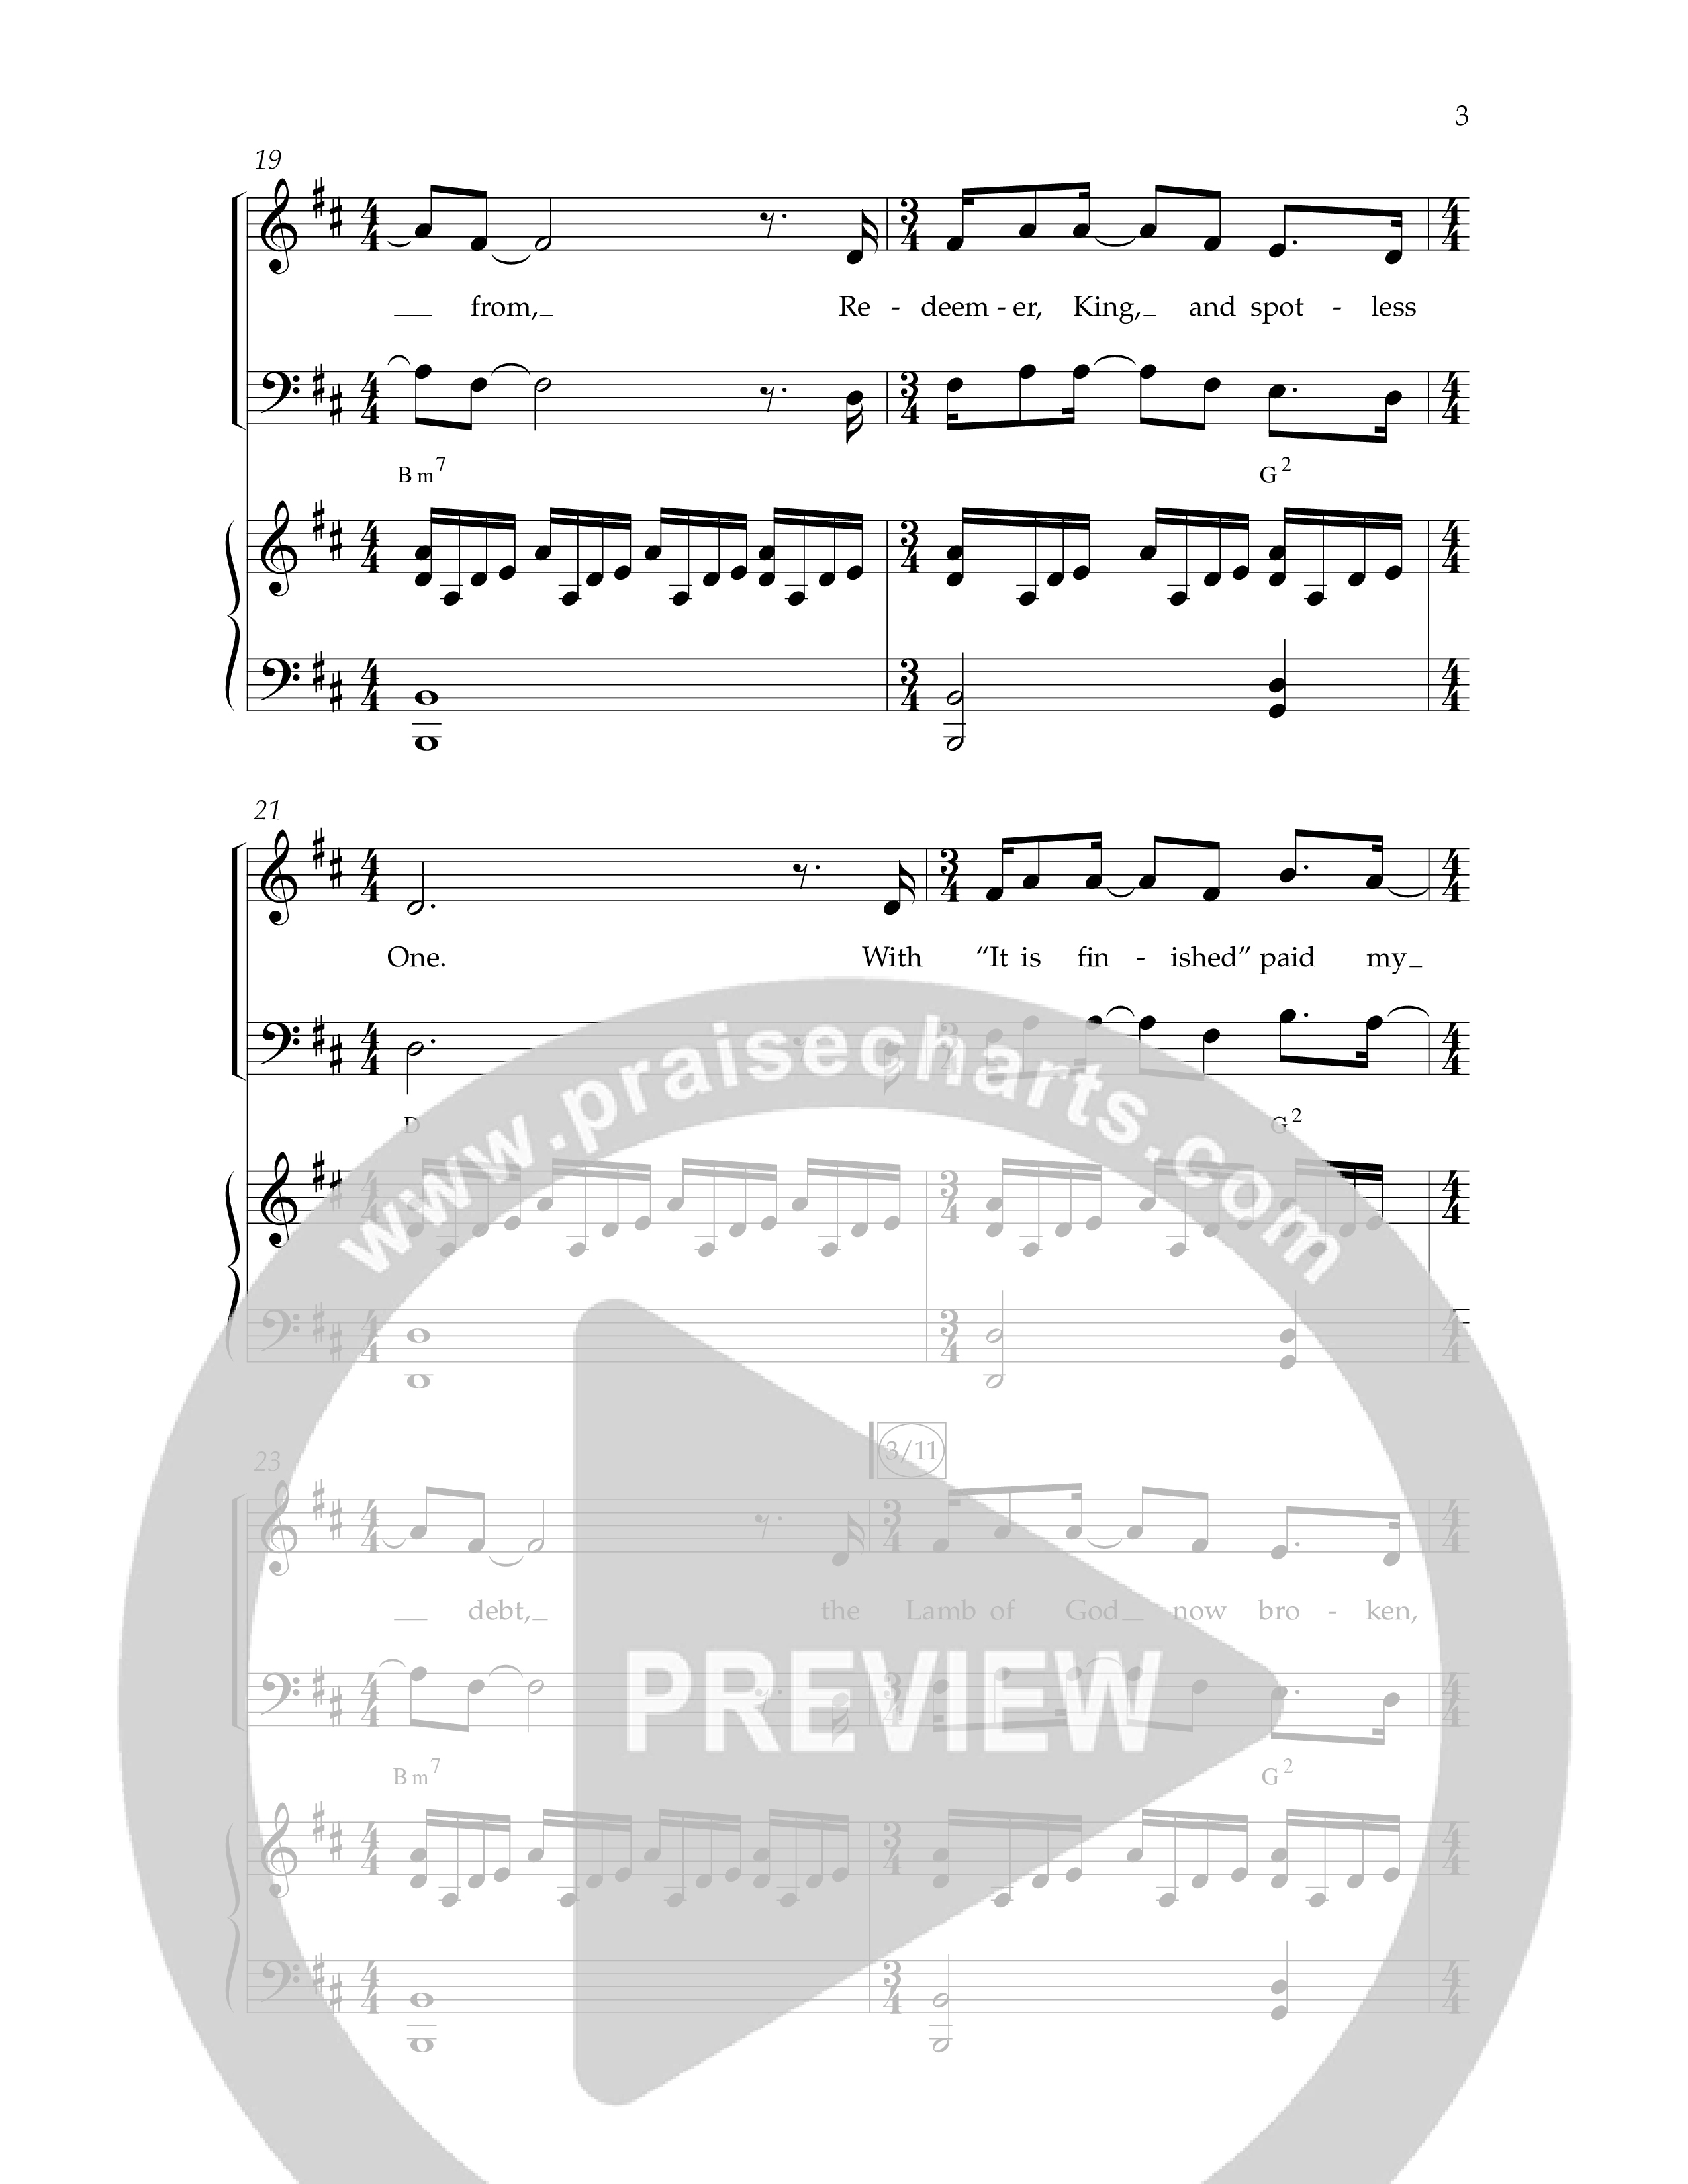 Hallelujah Love Divine (Choral Anthem SATB) Anthem (SATB/Piano) (Lifeway Choral / Arr. John Bolin / Arr. Don Koch / Orch. Phillip Keveren)